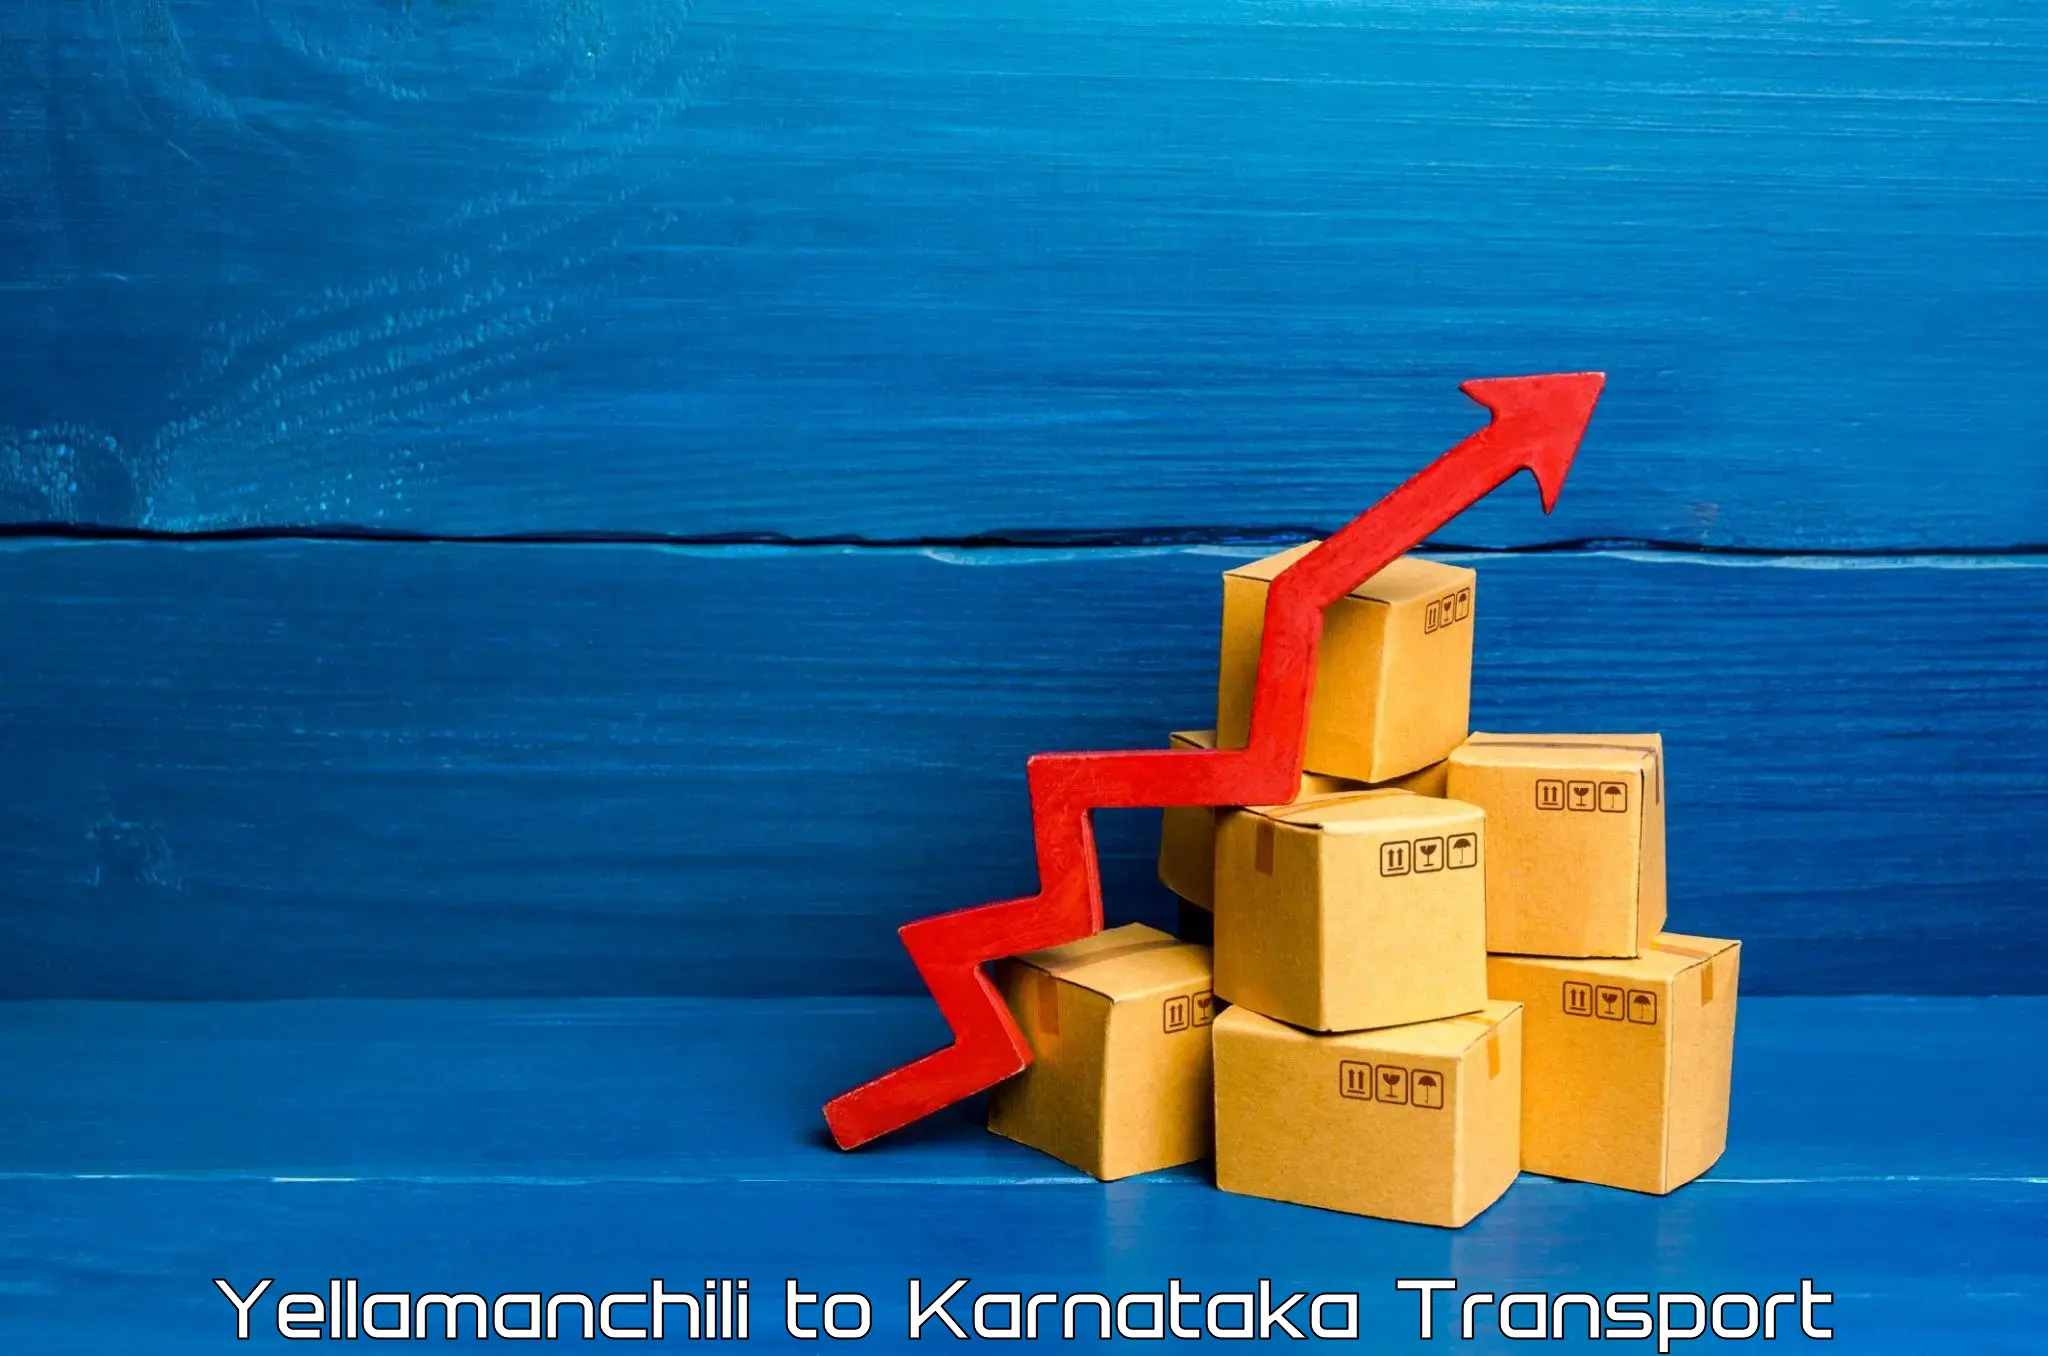 Best transport services in India Yellamanchili to Karnataka